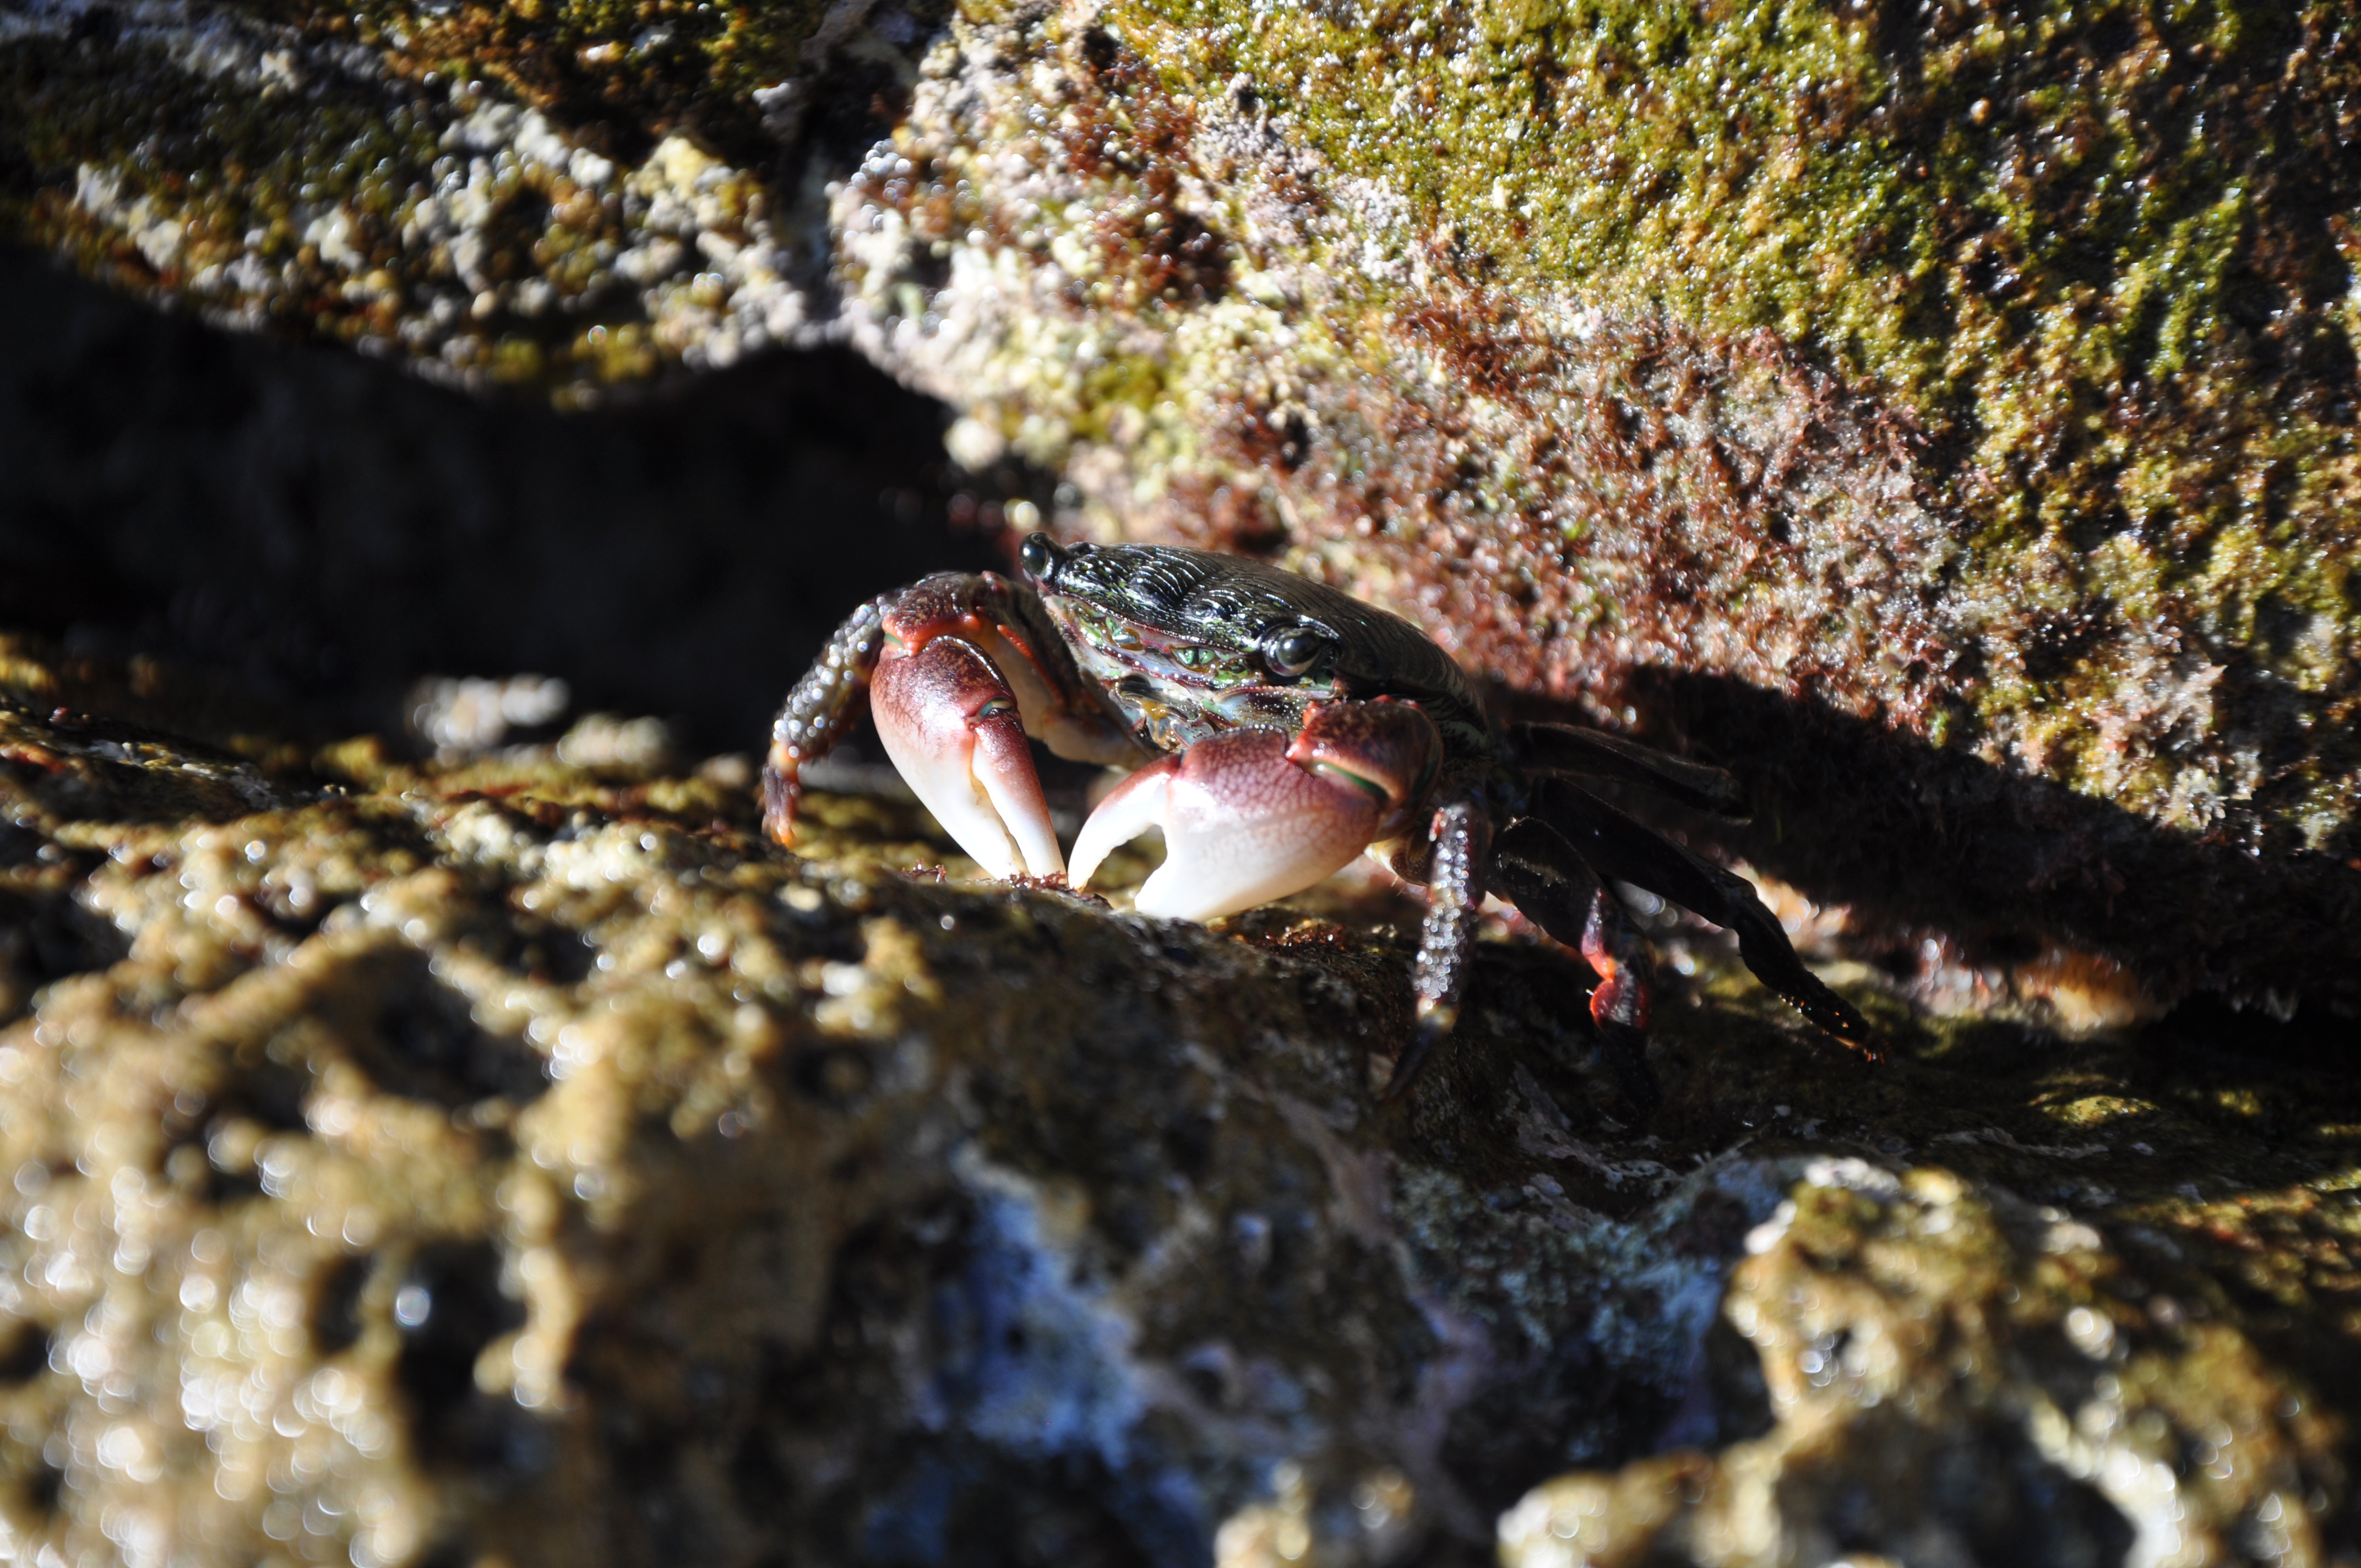 striped shore crab, shore crabs, tide pools, tide pooling, southern california tide pools, crustacean